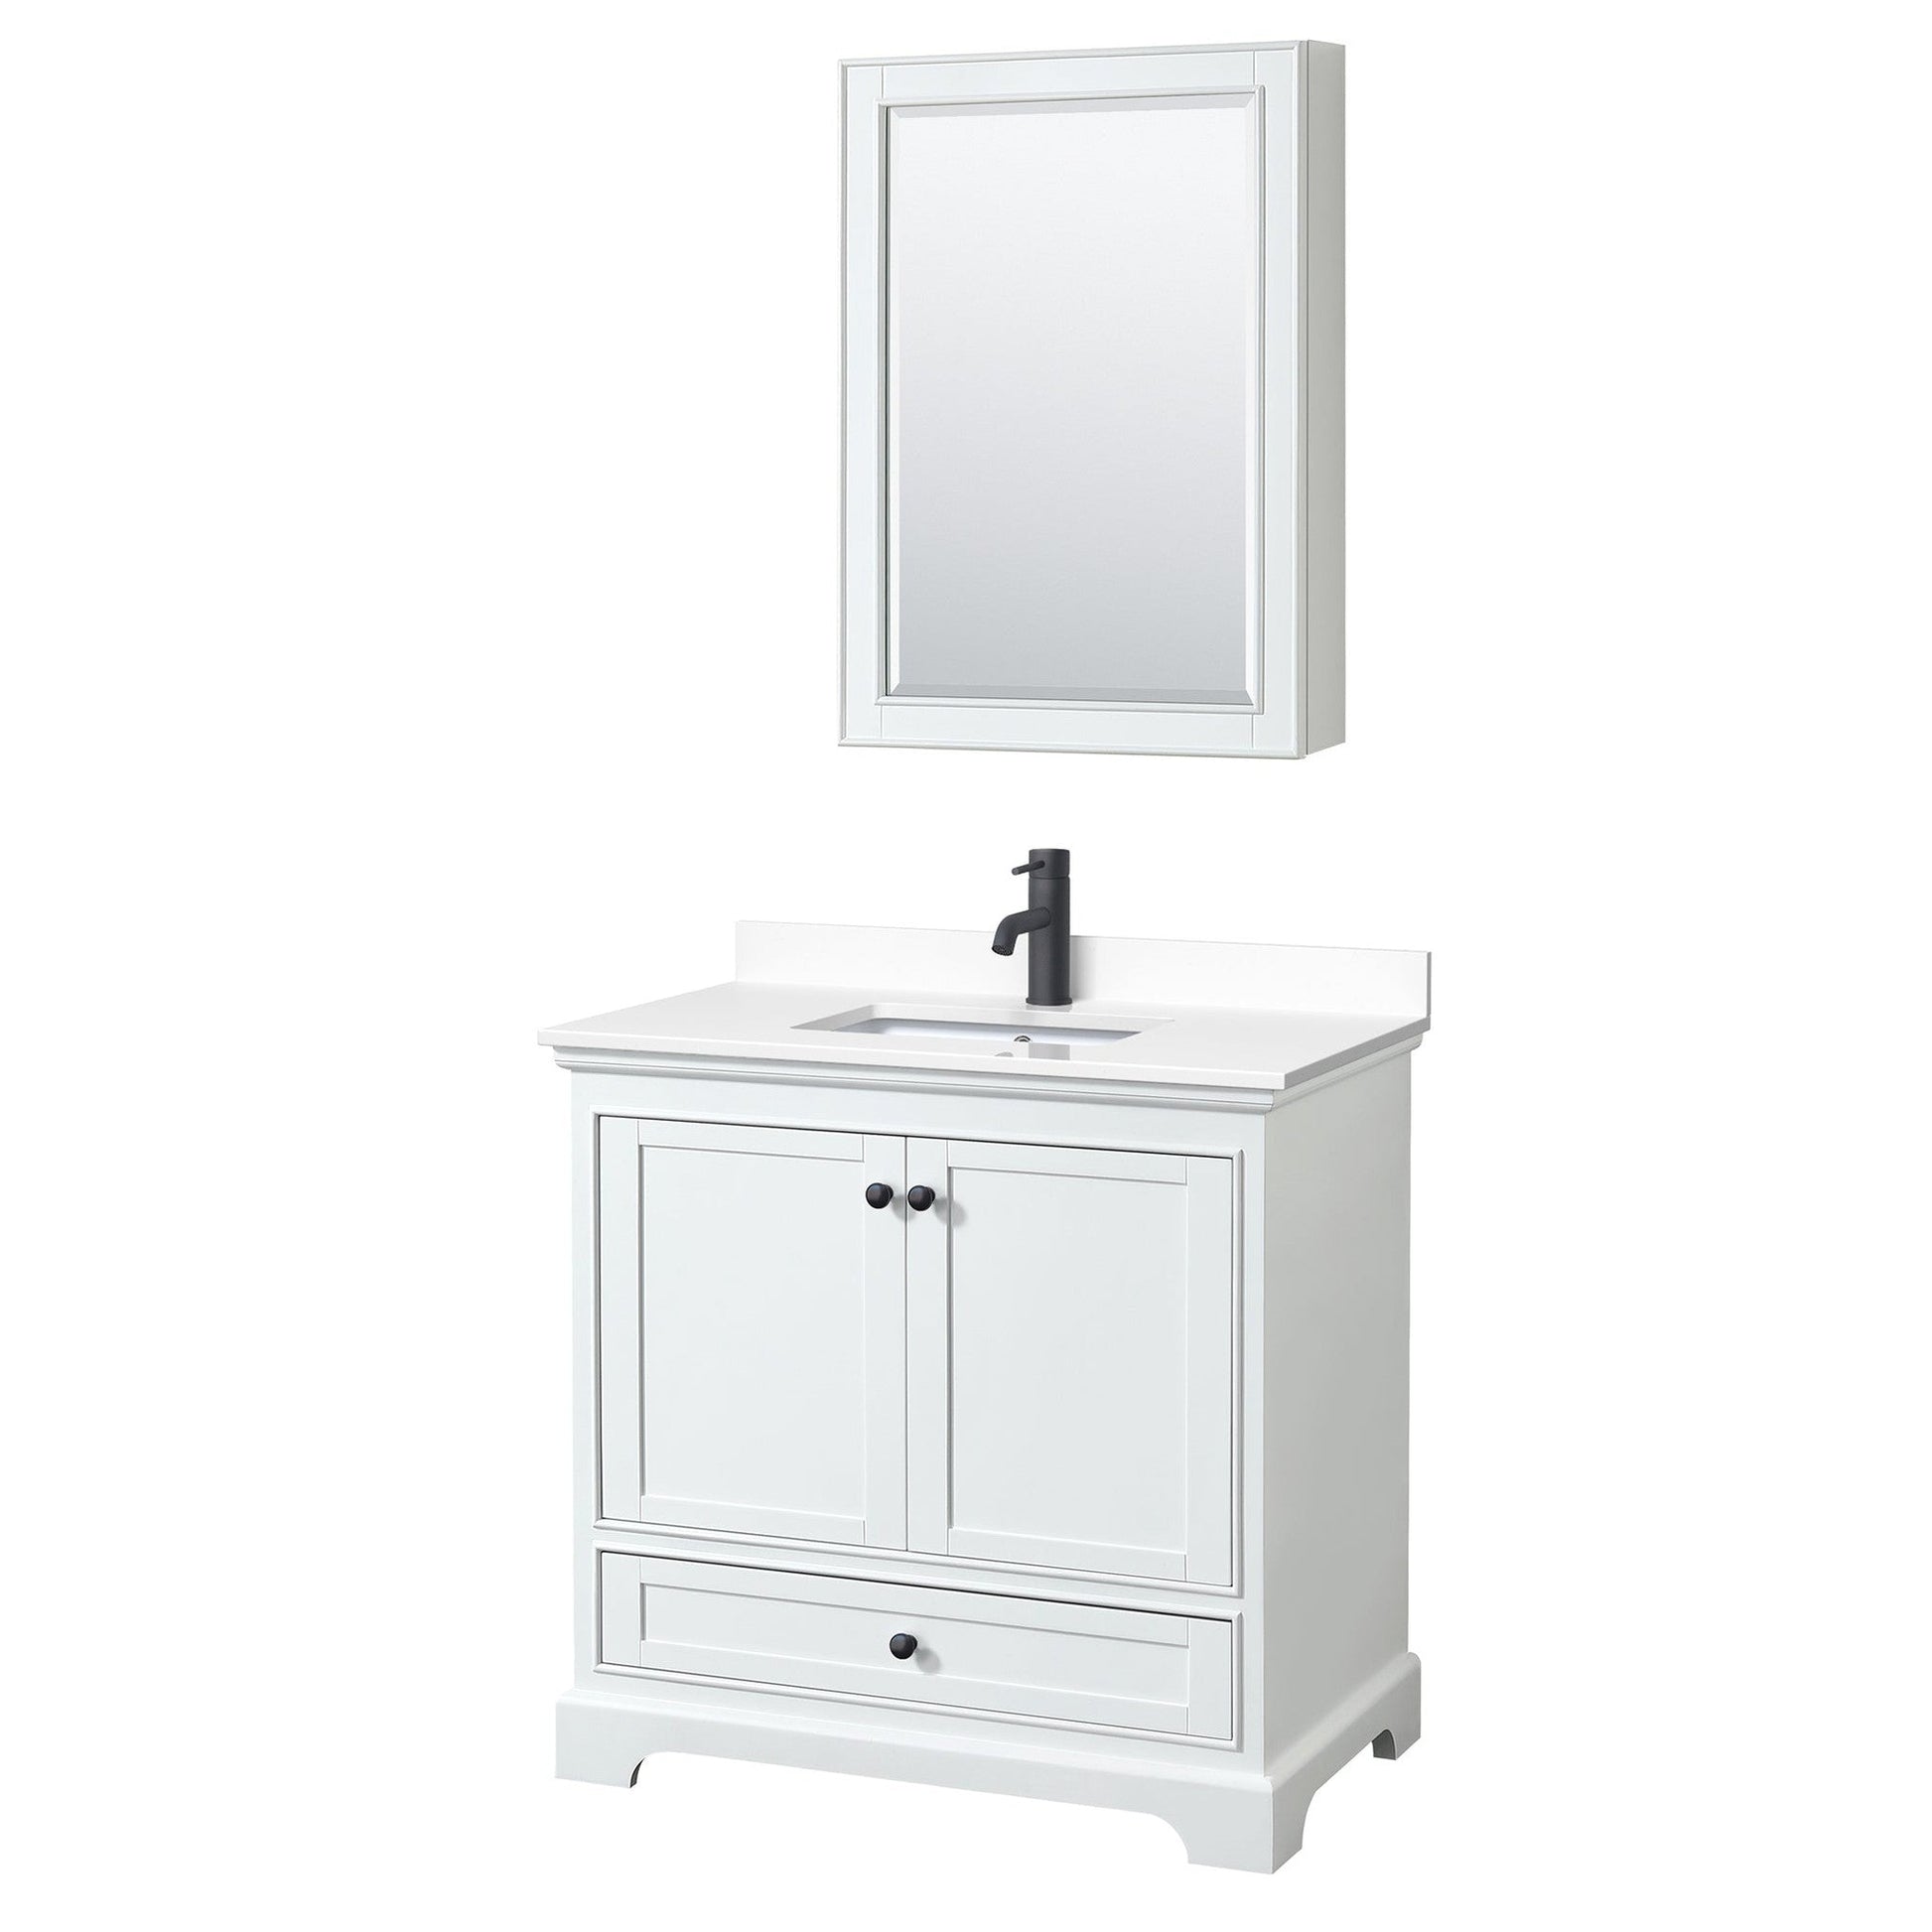 Deborah 36" Single Bathroom Vanity in White, White Cultured Marble Countertop, Undermount Square Sink, Matte Black Trim, Medicine Cabinet